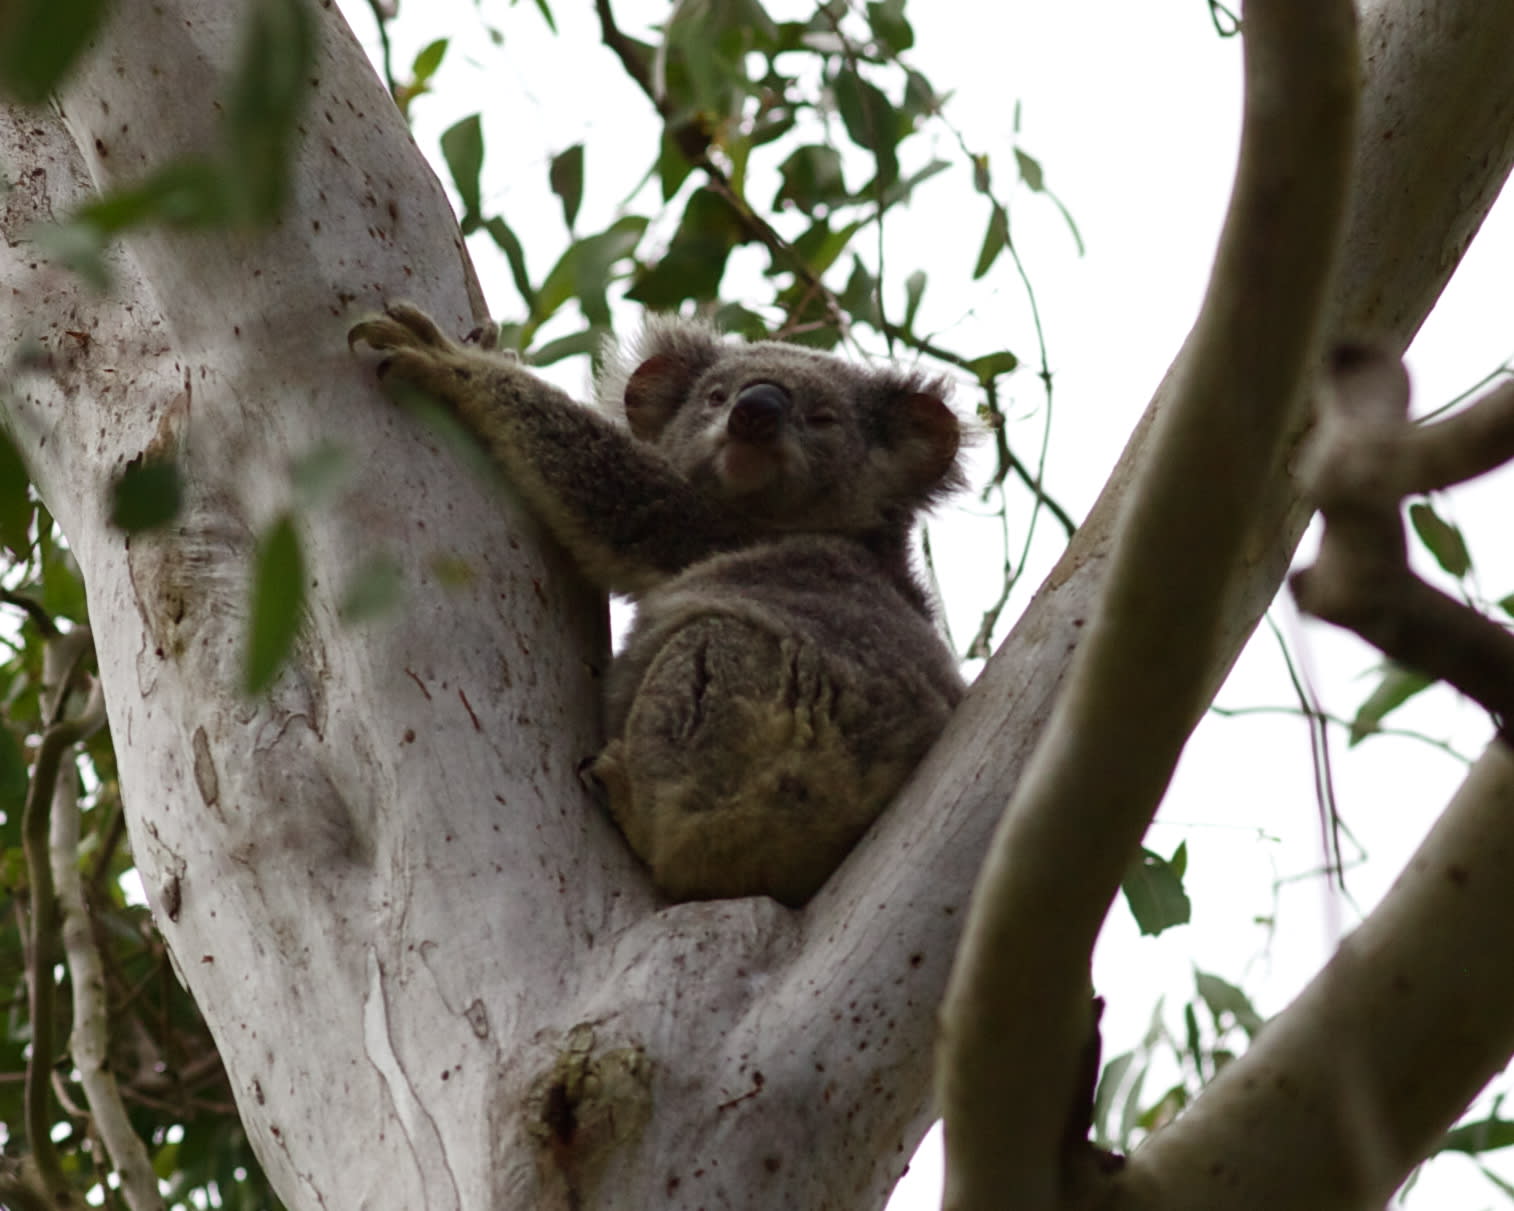 Have you heard a Koala growl?